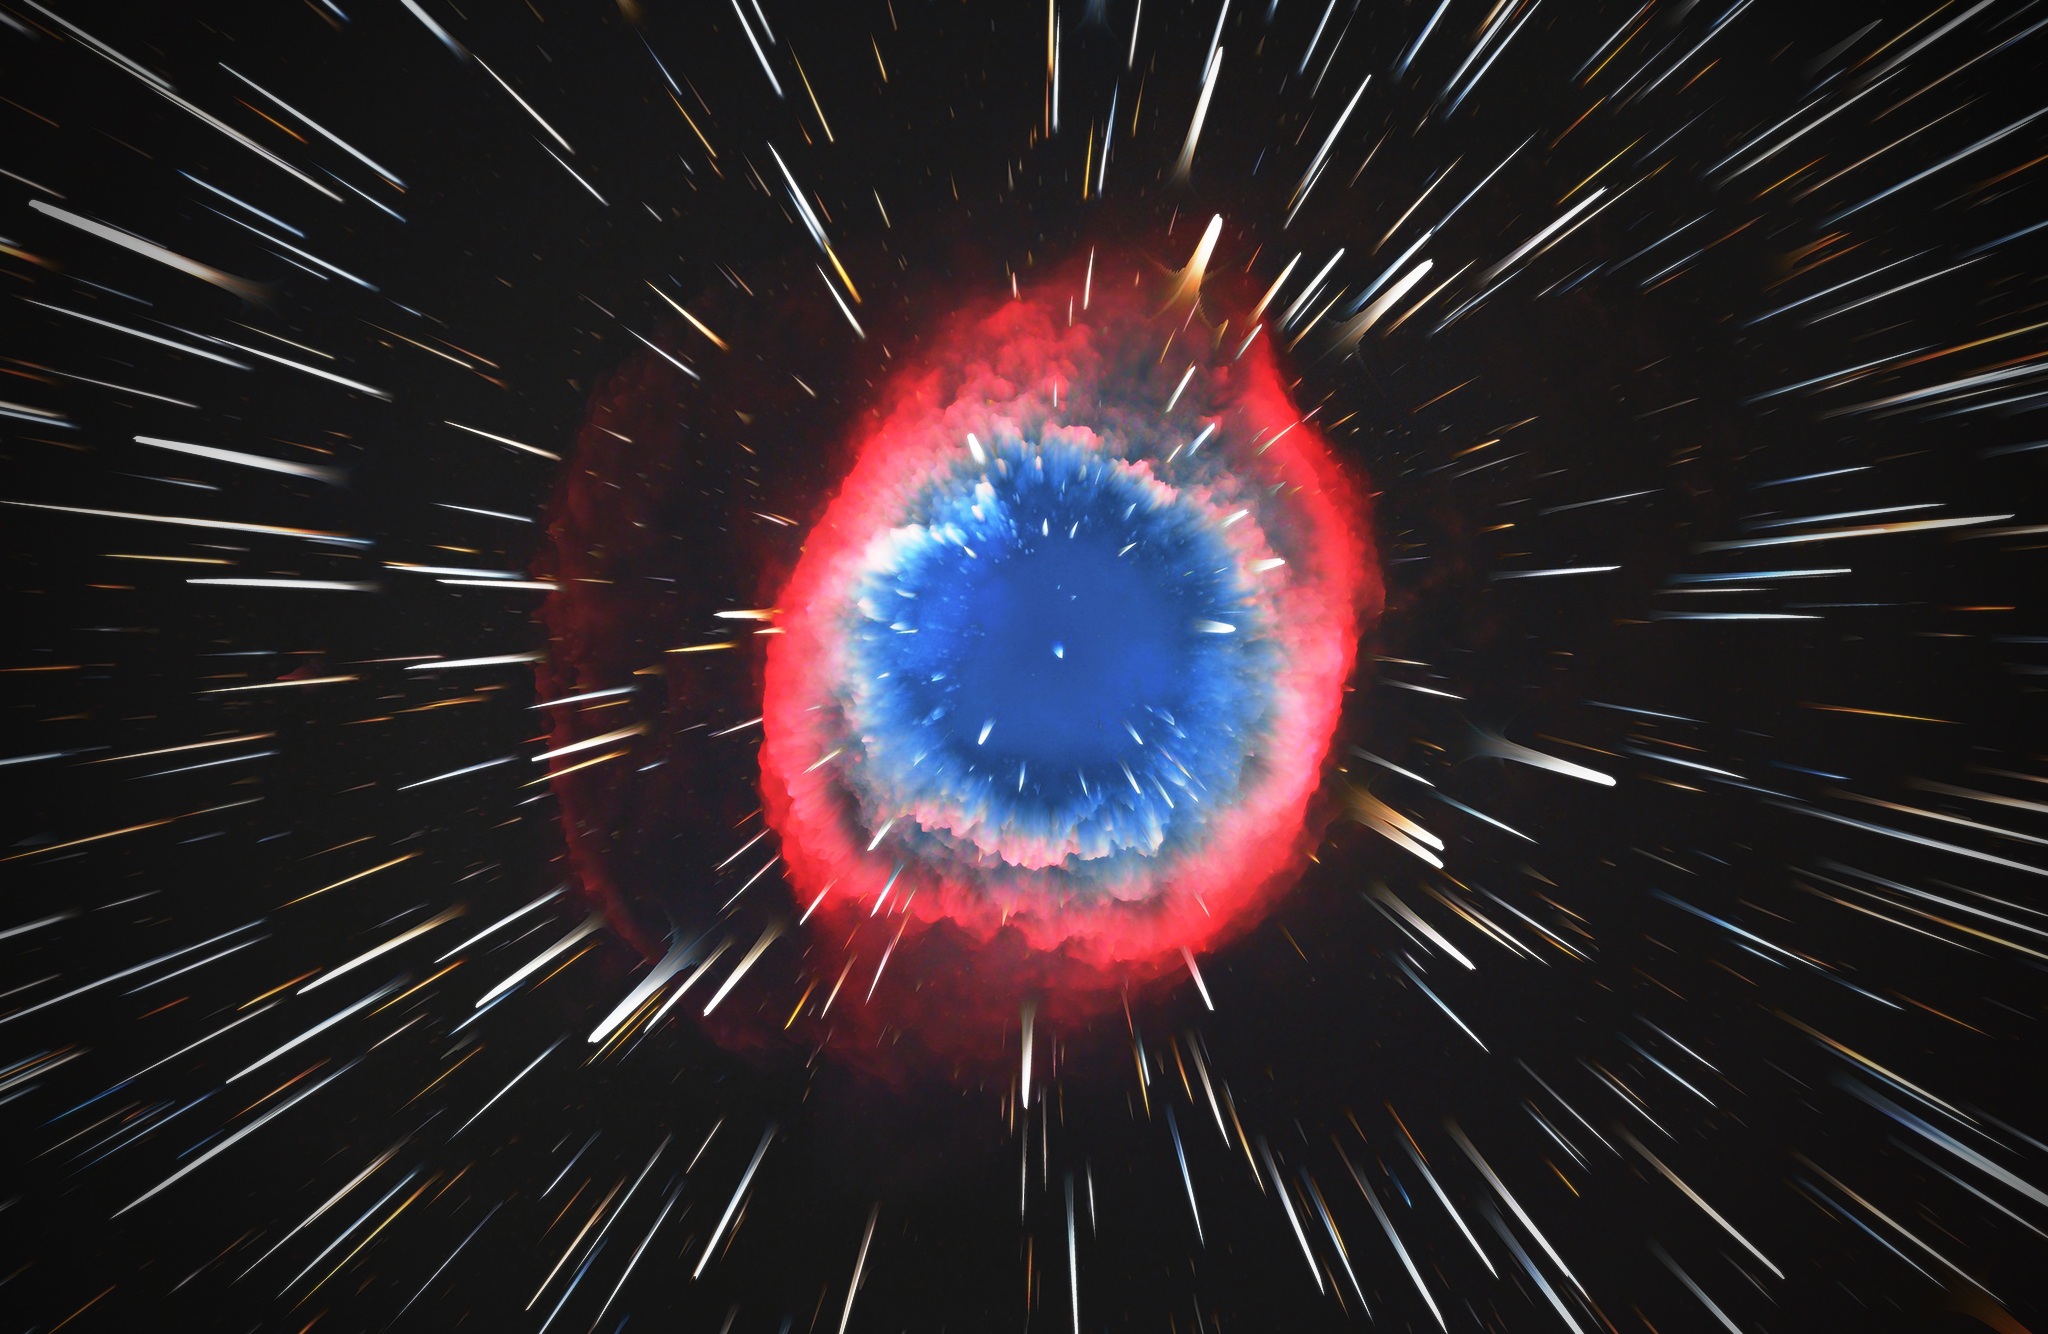 General 2048x1334 The Big Bang space stars nebula explosion